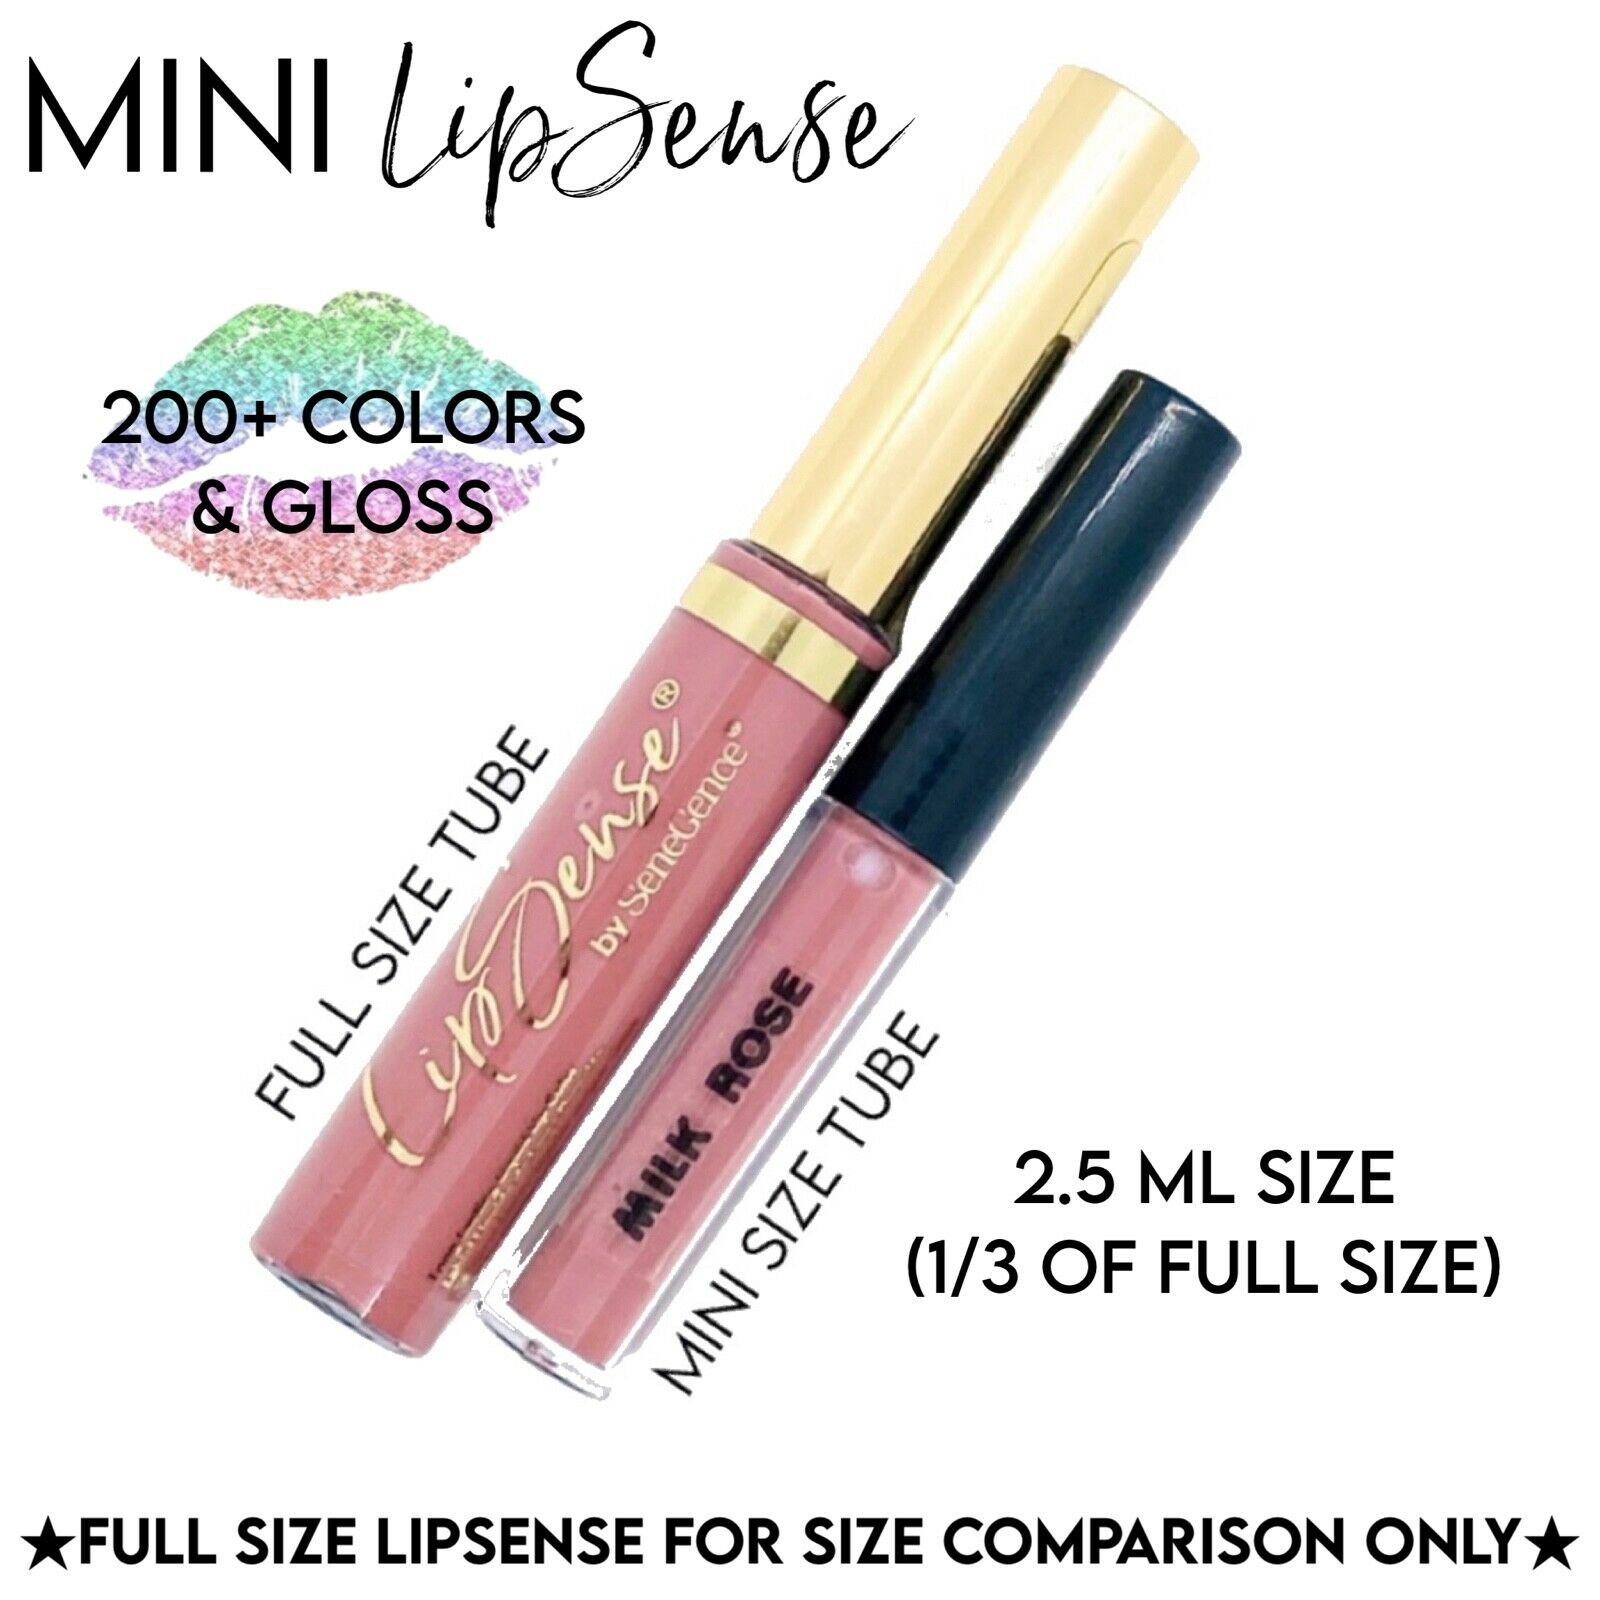 Lipsense 2.5ml Larger Mini / Travel Size Authentic Lip Colors & Gloss 15% Off 4+